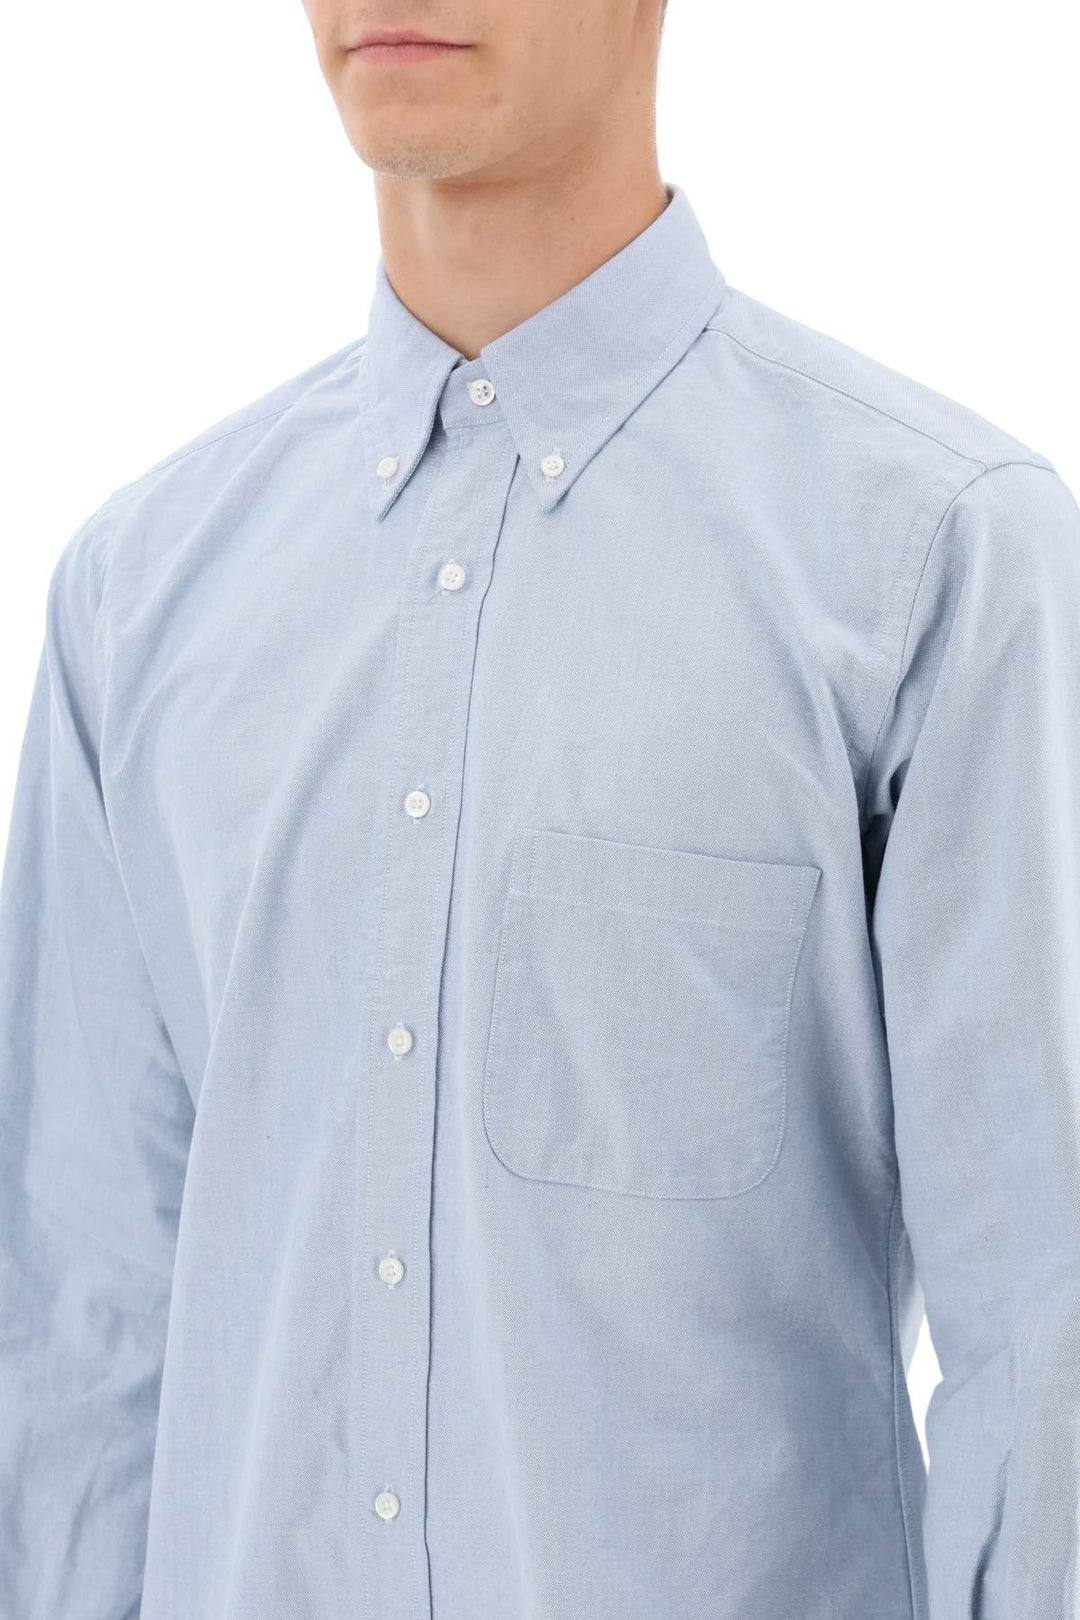 Thom browne oxford cotton button-down shirt-3